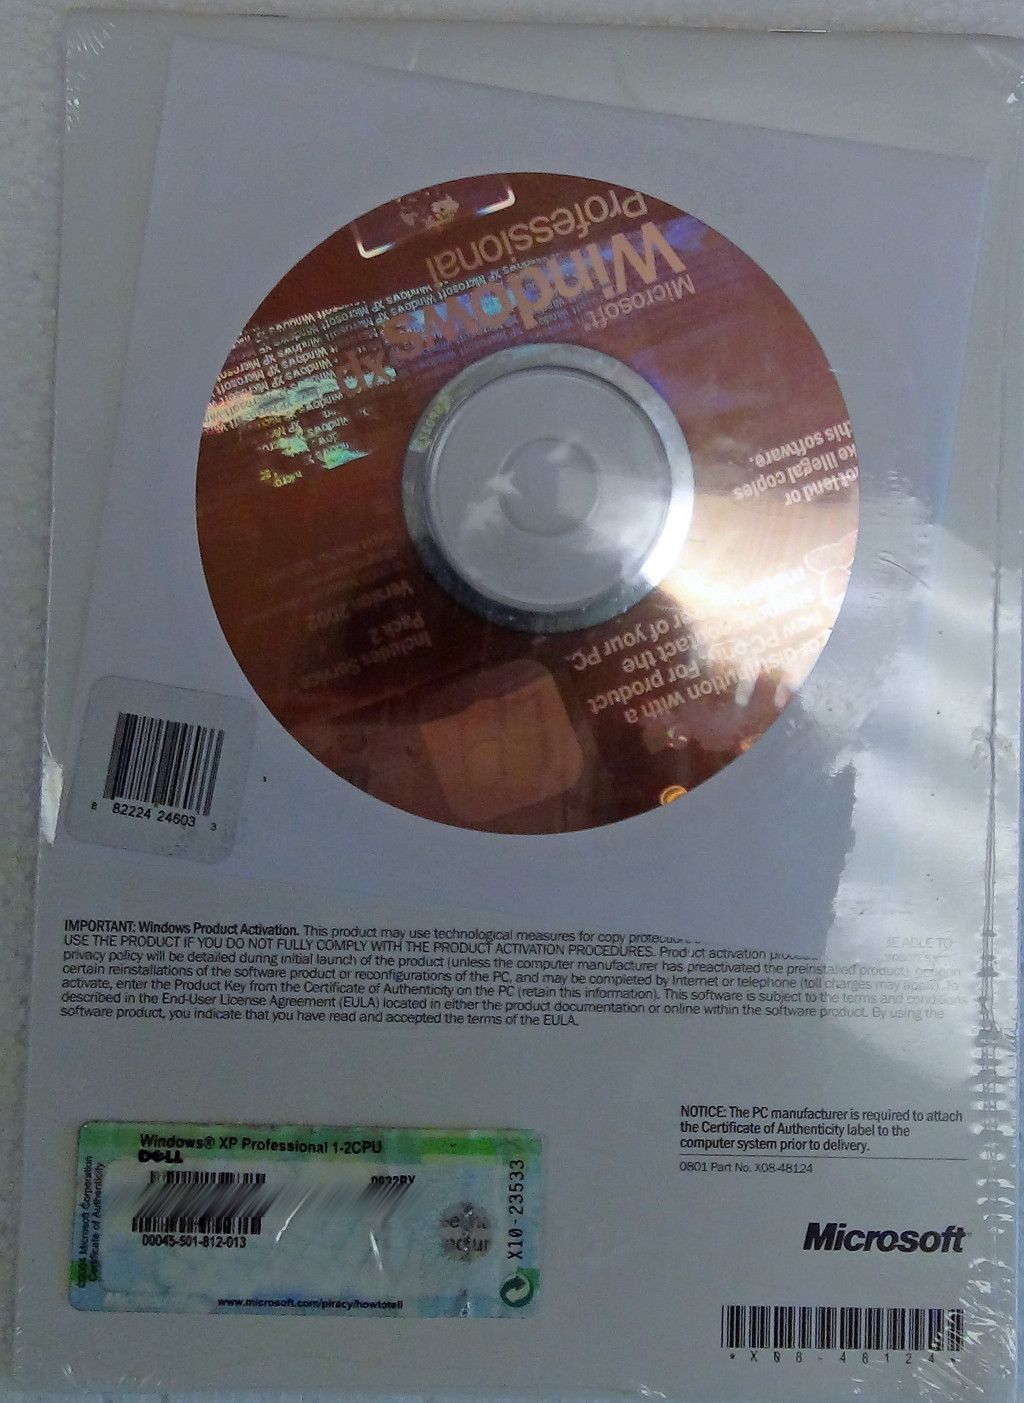 Windows XP Professional Microsoft w SP2 SEALED Full CD